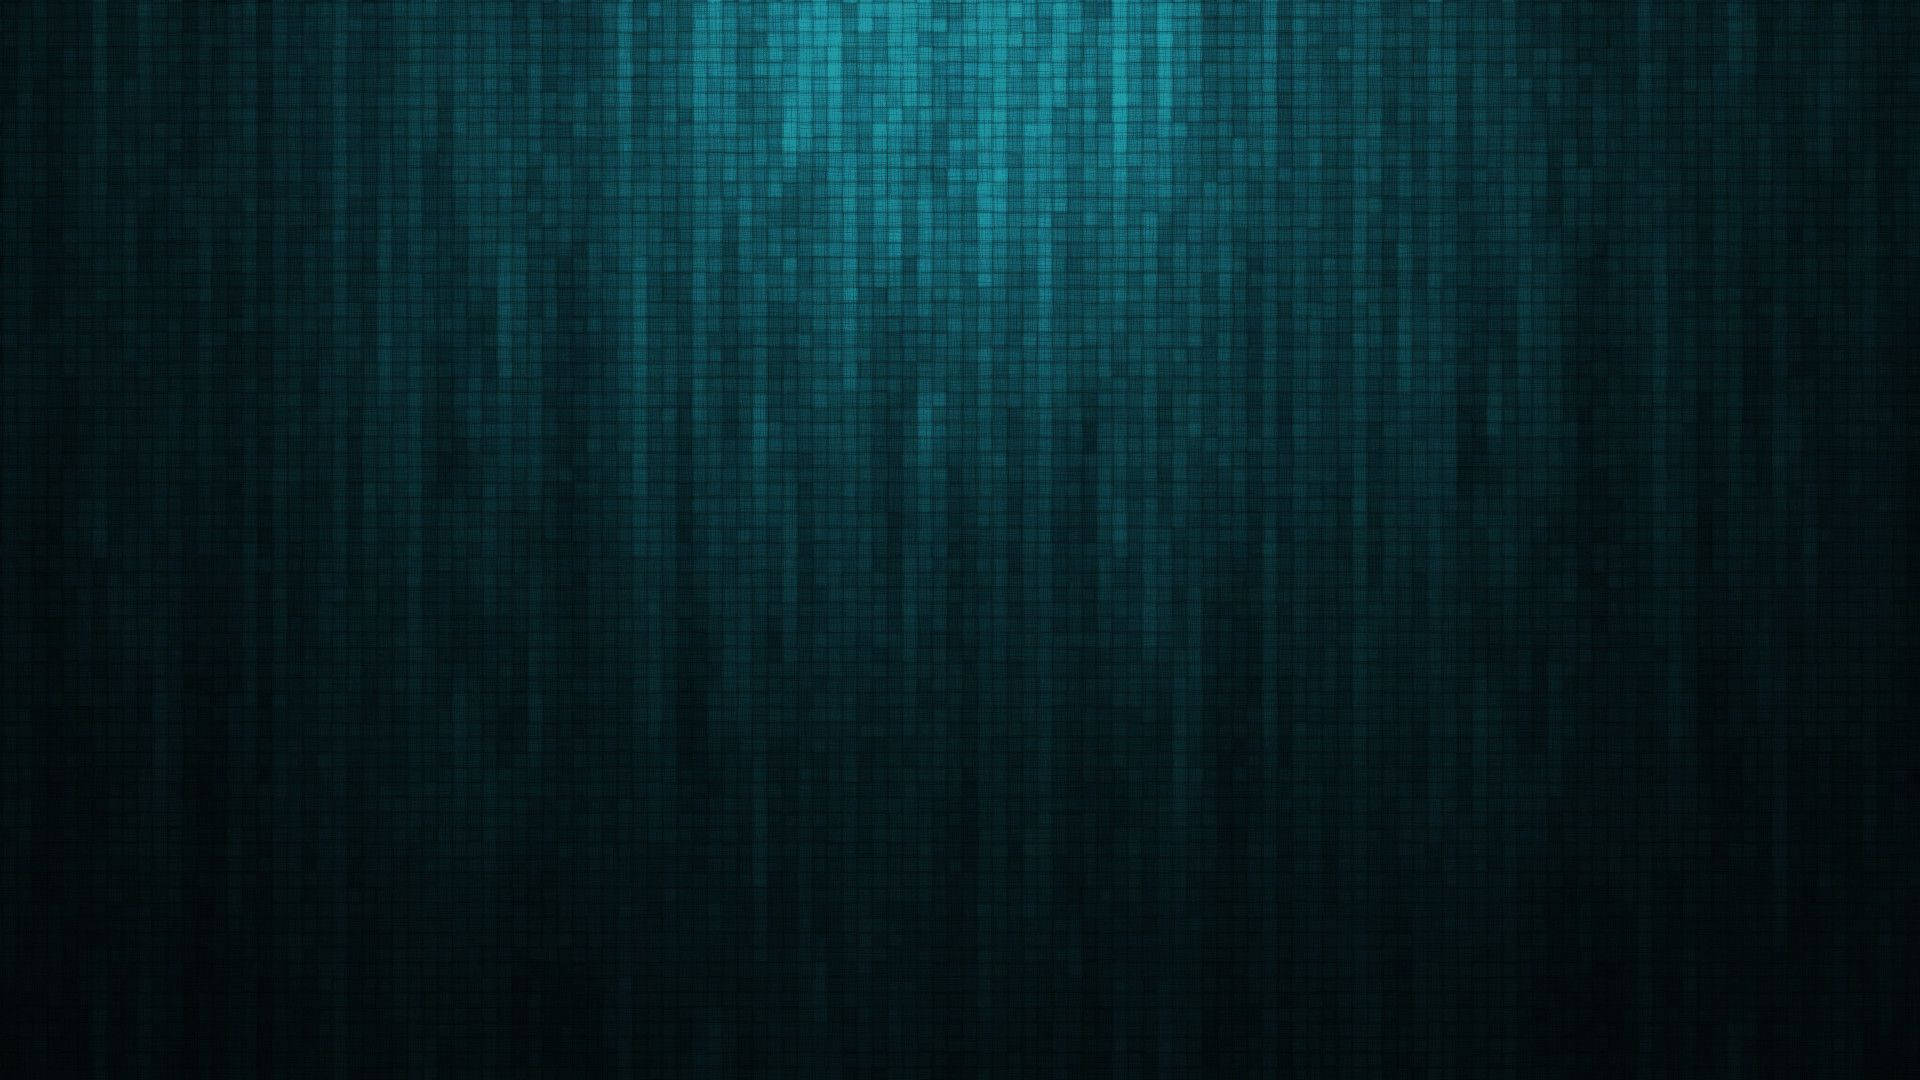 Basic Blue Pixels Background